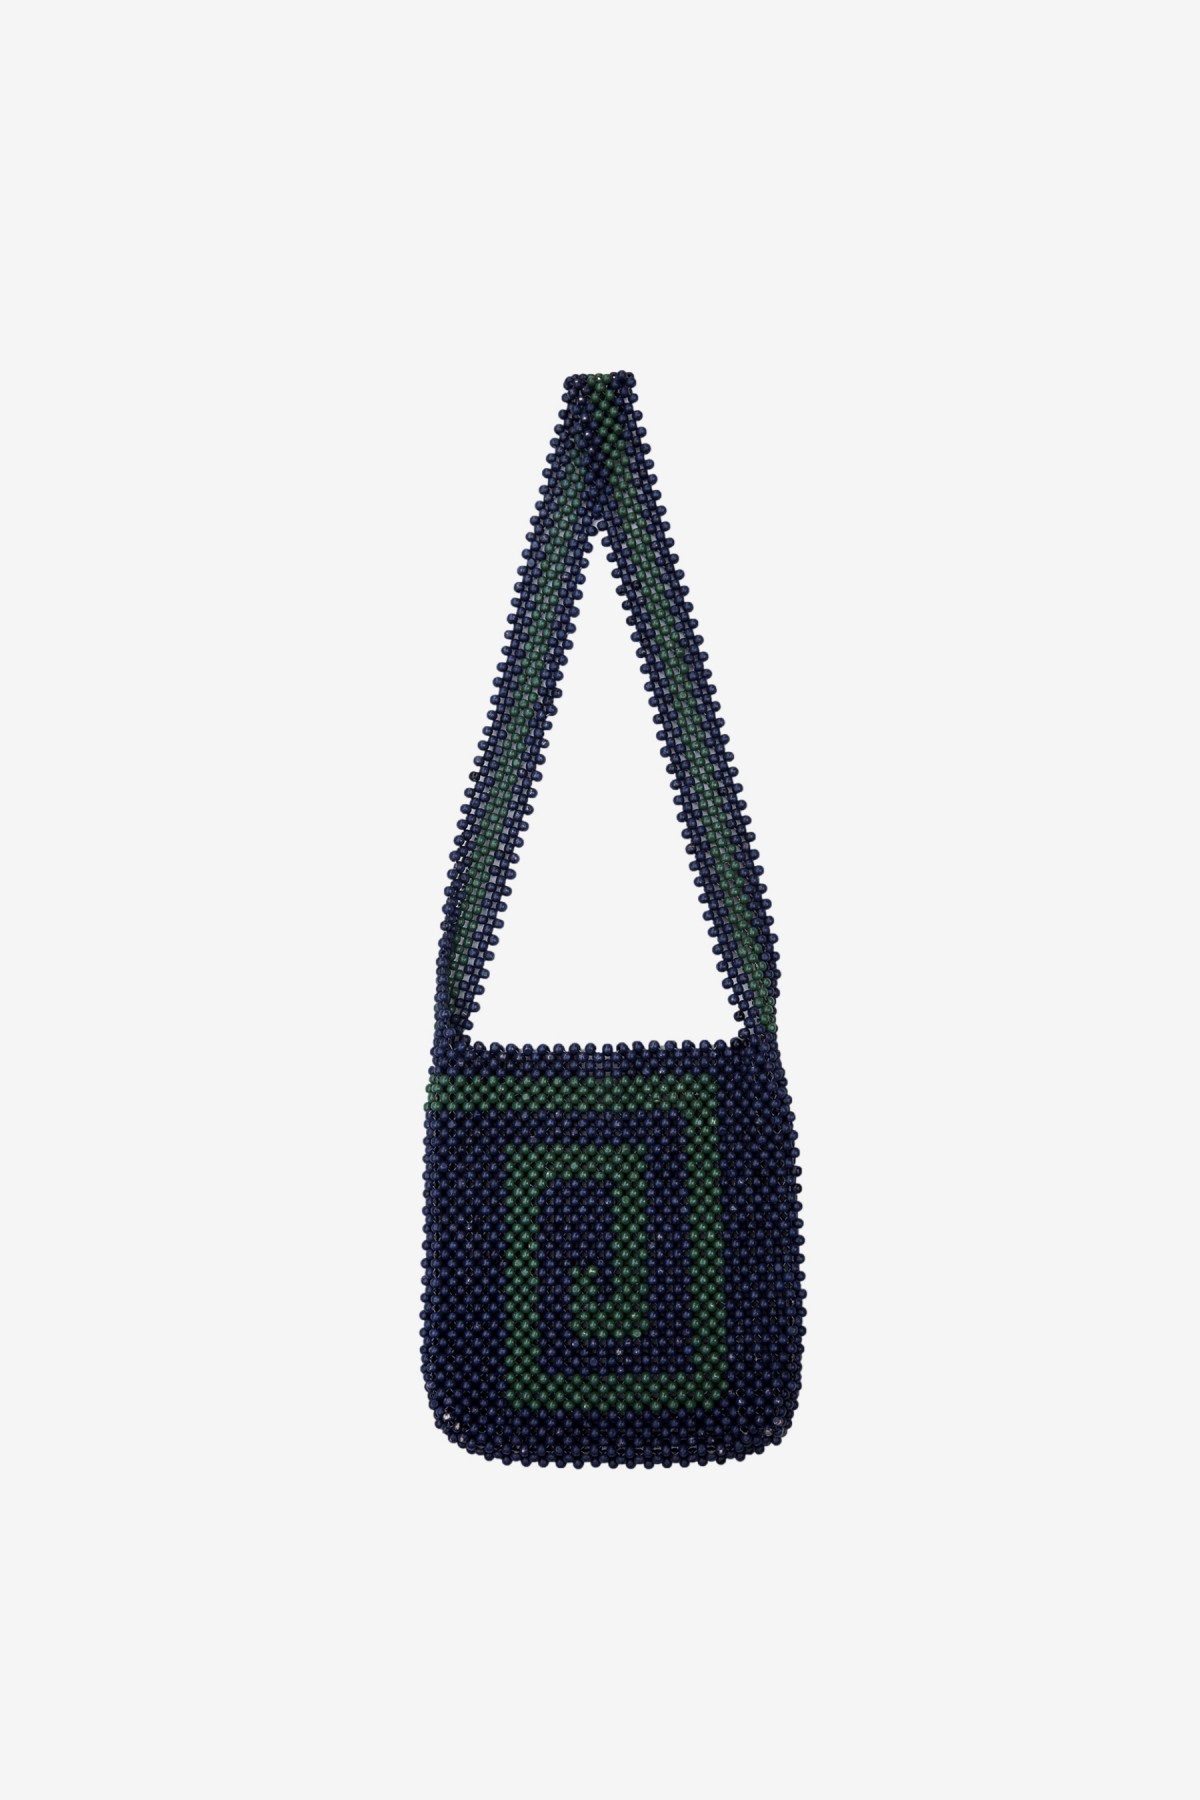 YMC You Must Create Wooden Bead Bag in Navy- Green